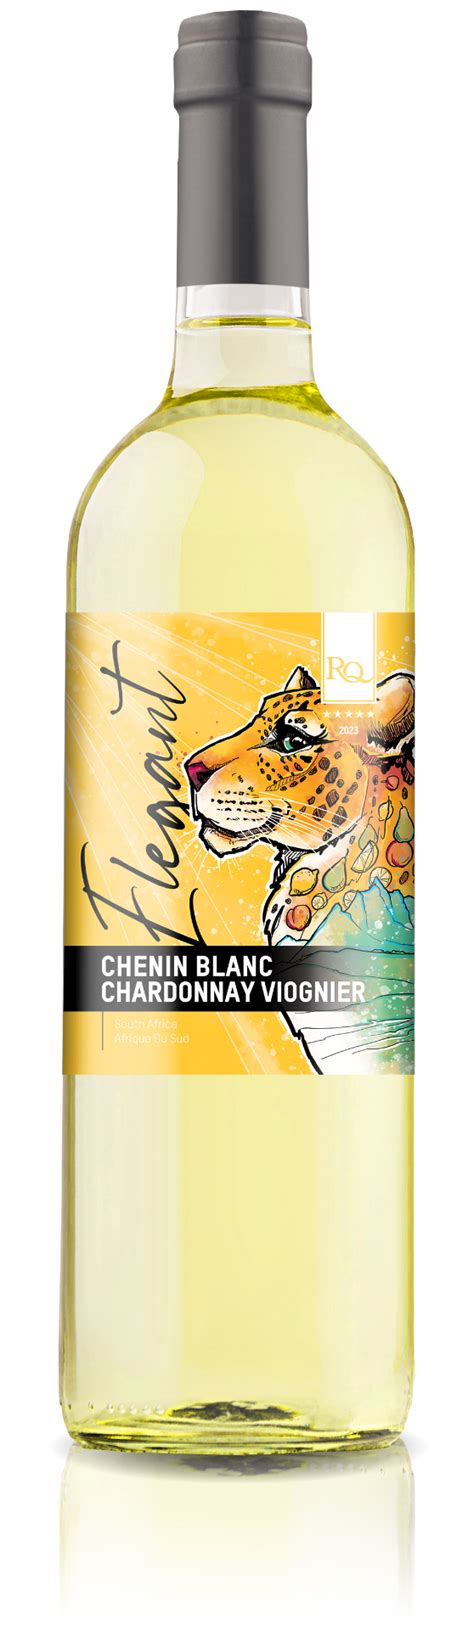 Rq23 Elegant South African Chenin Blanc Chardonnay Viognier